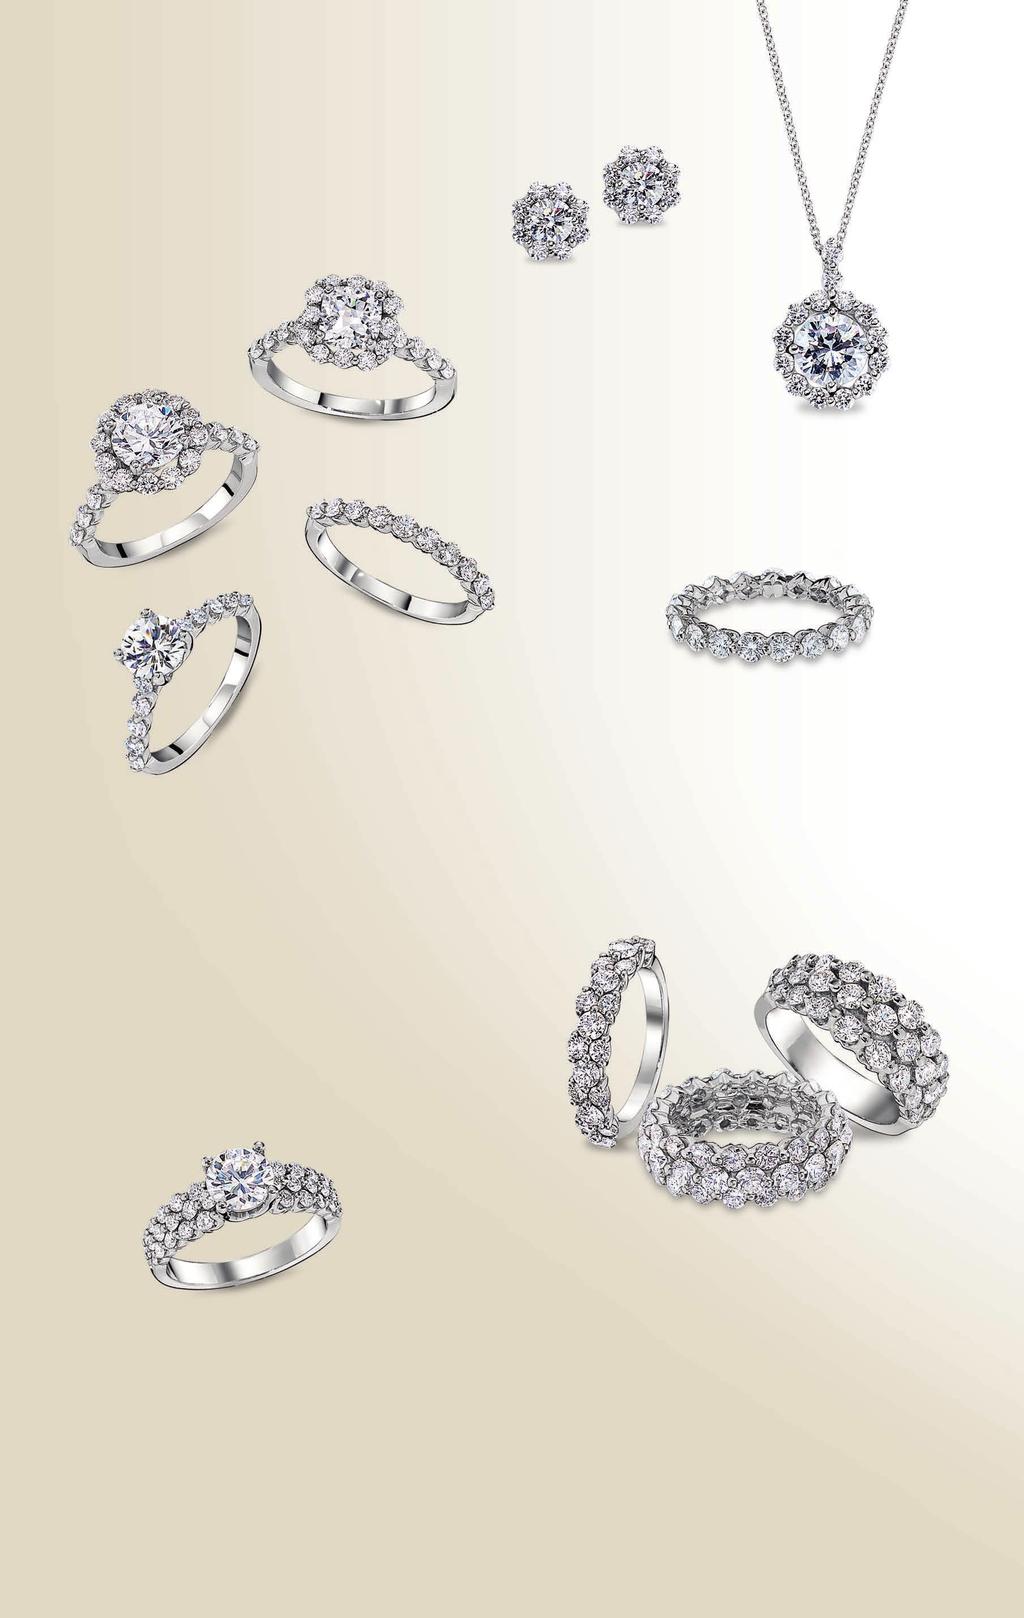 G A H K I J A. Royal Prong cushion halo engagement ring*, $3,350. Royal Prong round halo engagement ring*, $4,080. Royal Prong engagement ring*, $2,690. Royal Prong diamond band, $2,360.